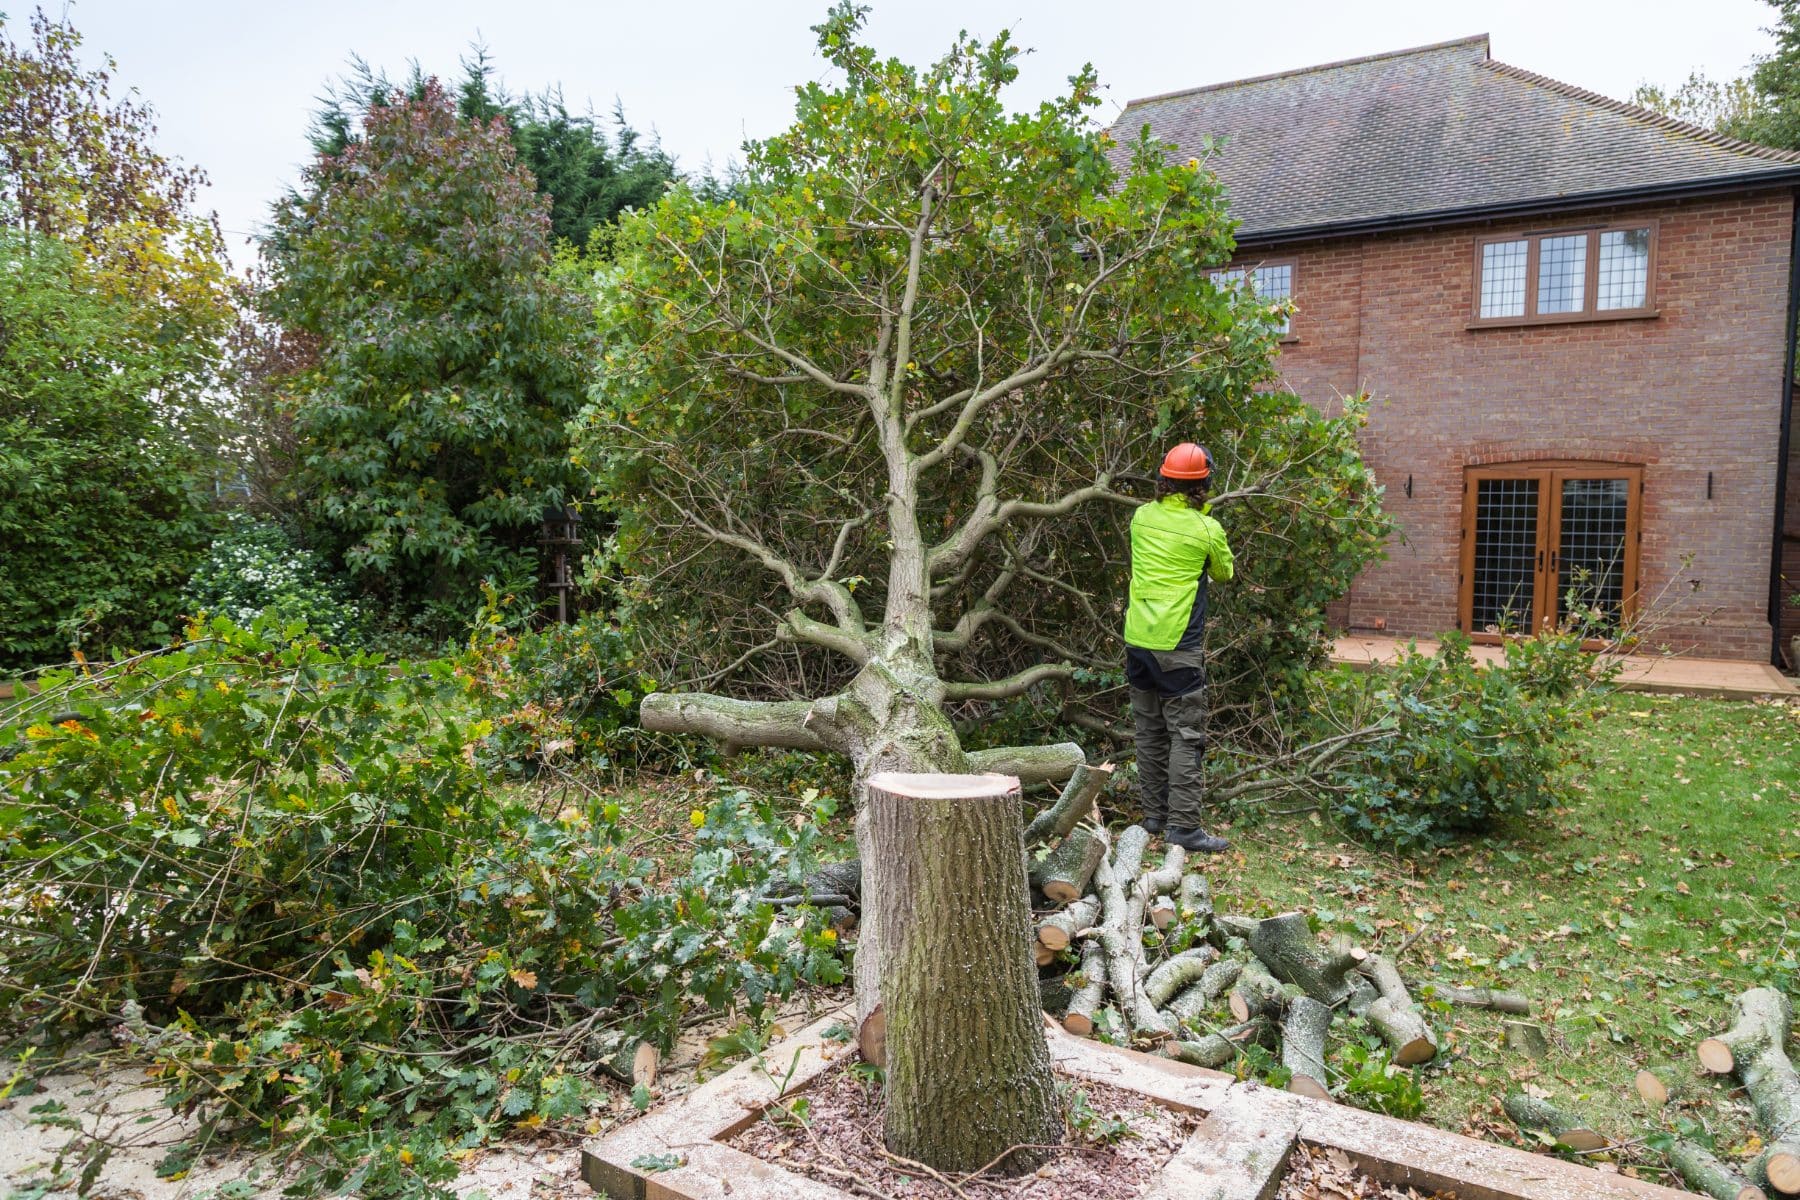 Tree felling methods - is straight or section felling best?